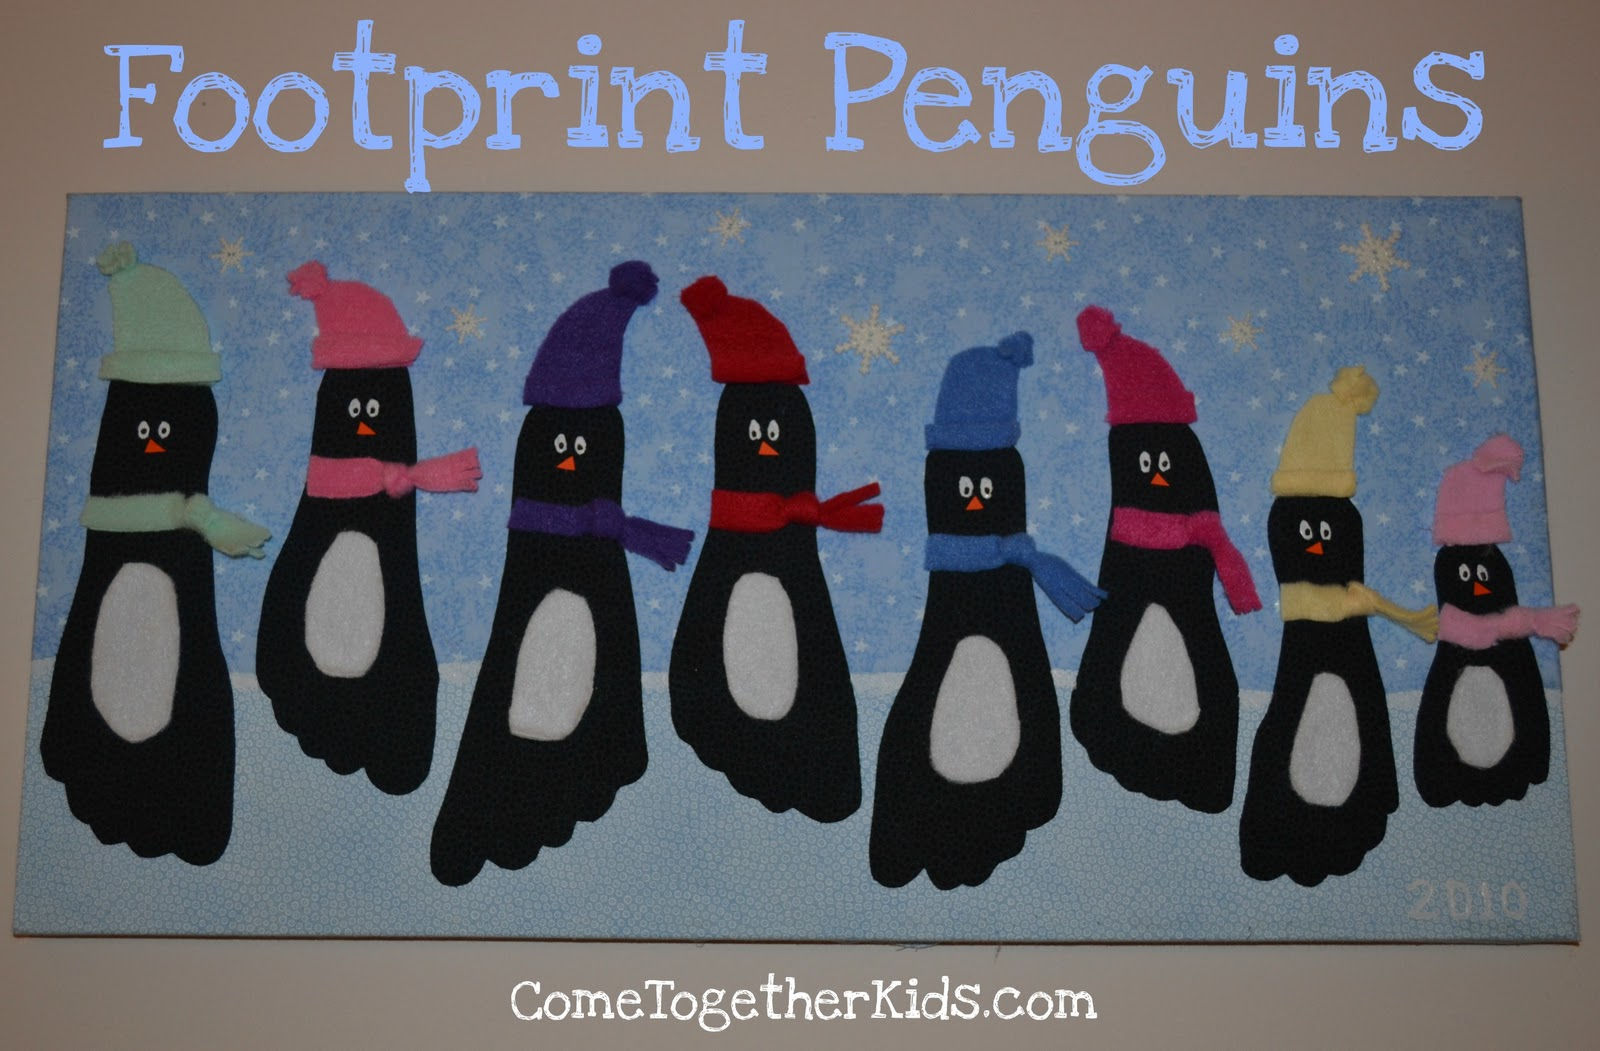 40+ Creative Handprint and Footprint Crafts for Christmas --> Footprint Penguin Wall Hanging